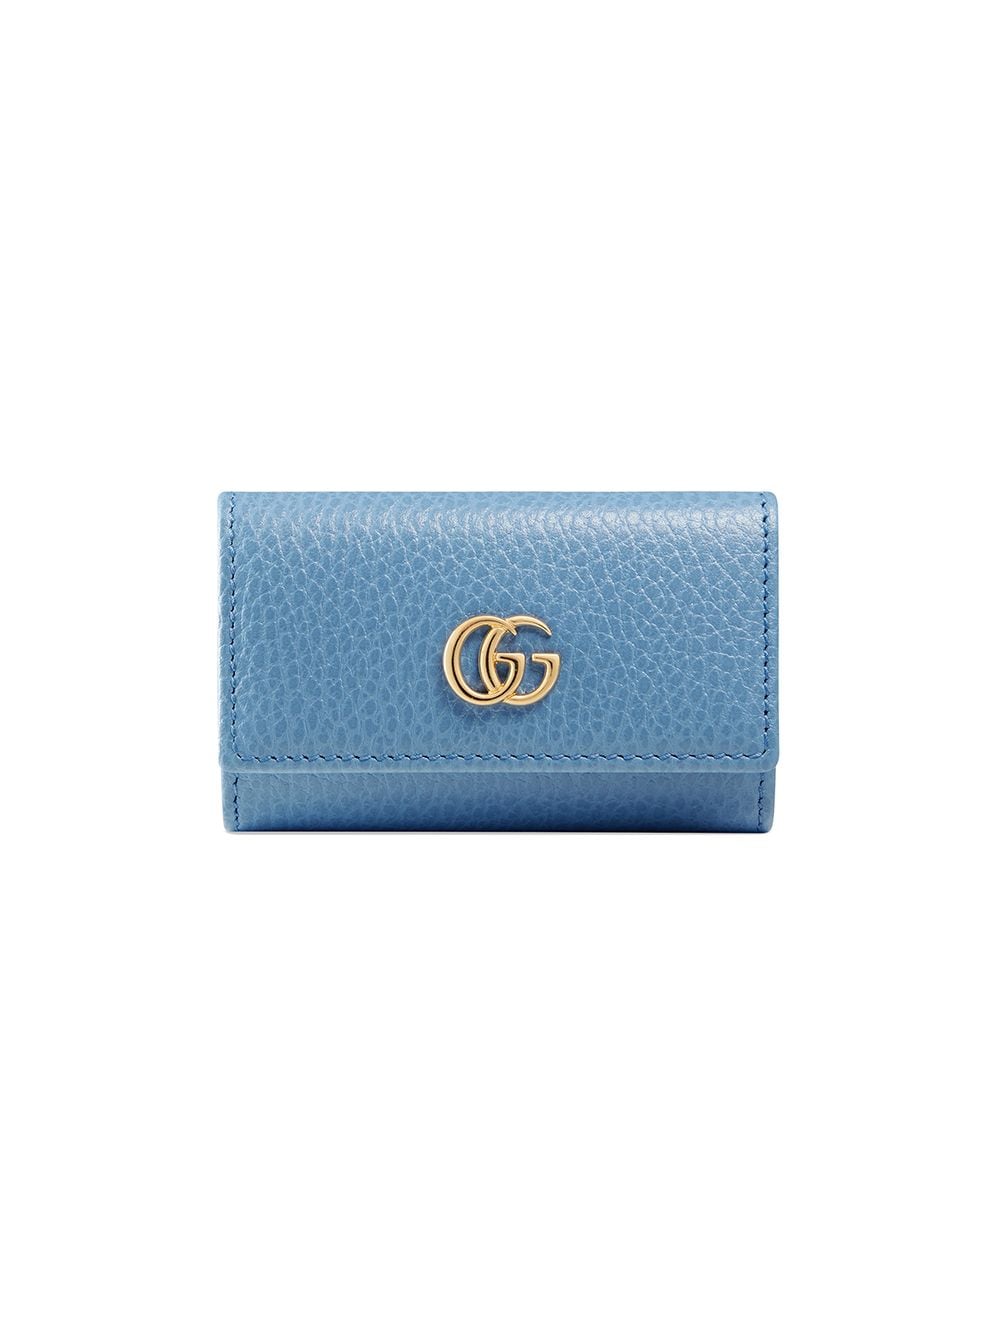 Gucci Gucci Gg Marmont 456118.0416 Brand Accessory Key Case Ladies Auction